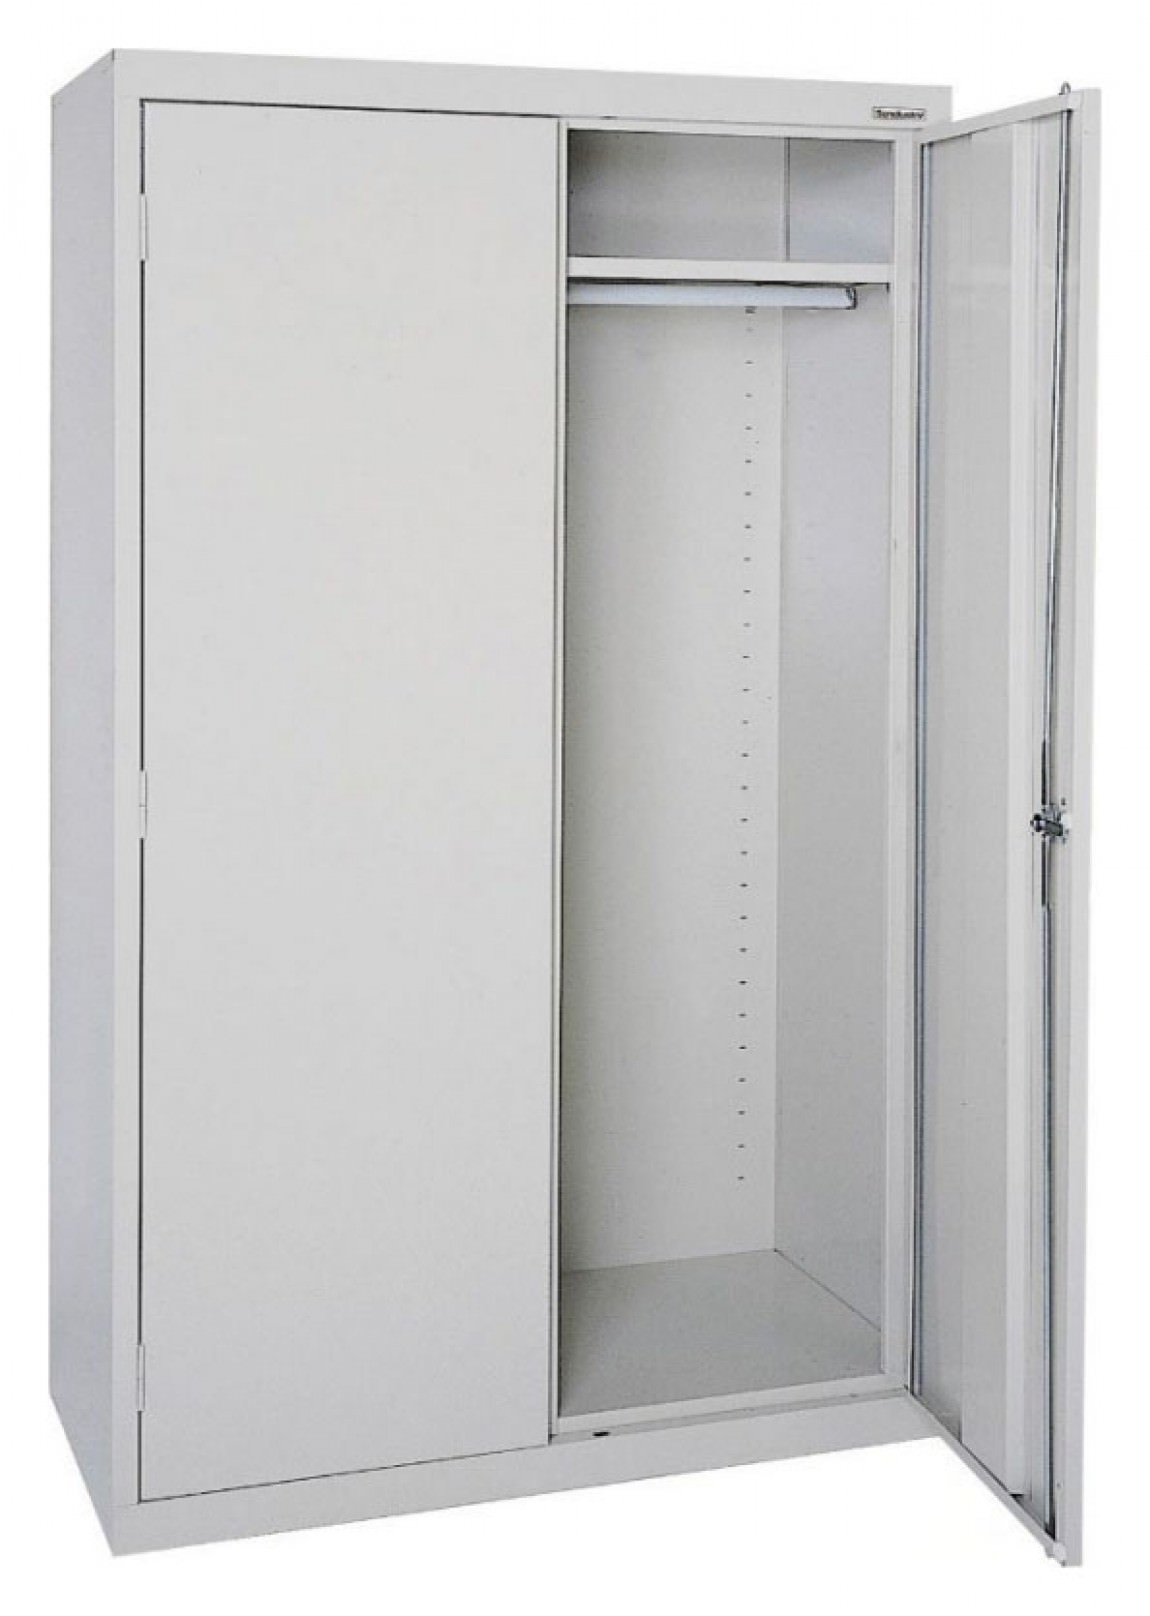 https://madisonliquidators.com/images/p/1150/34394-wardrobe-storage-cabinet-1.jpg